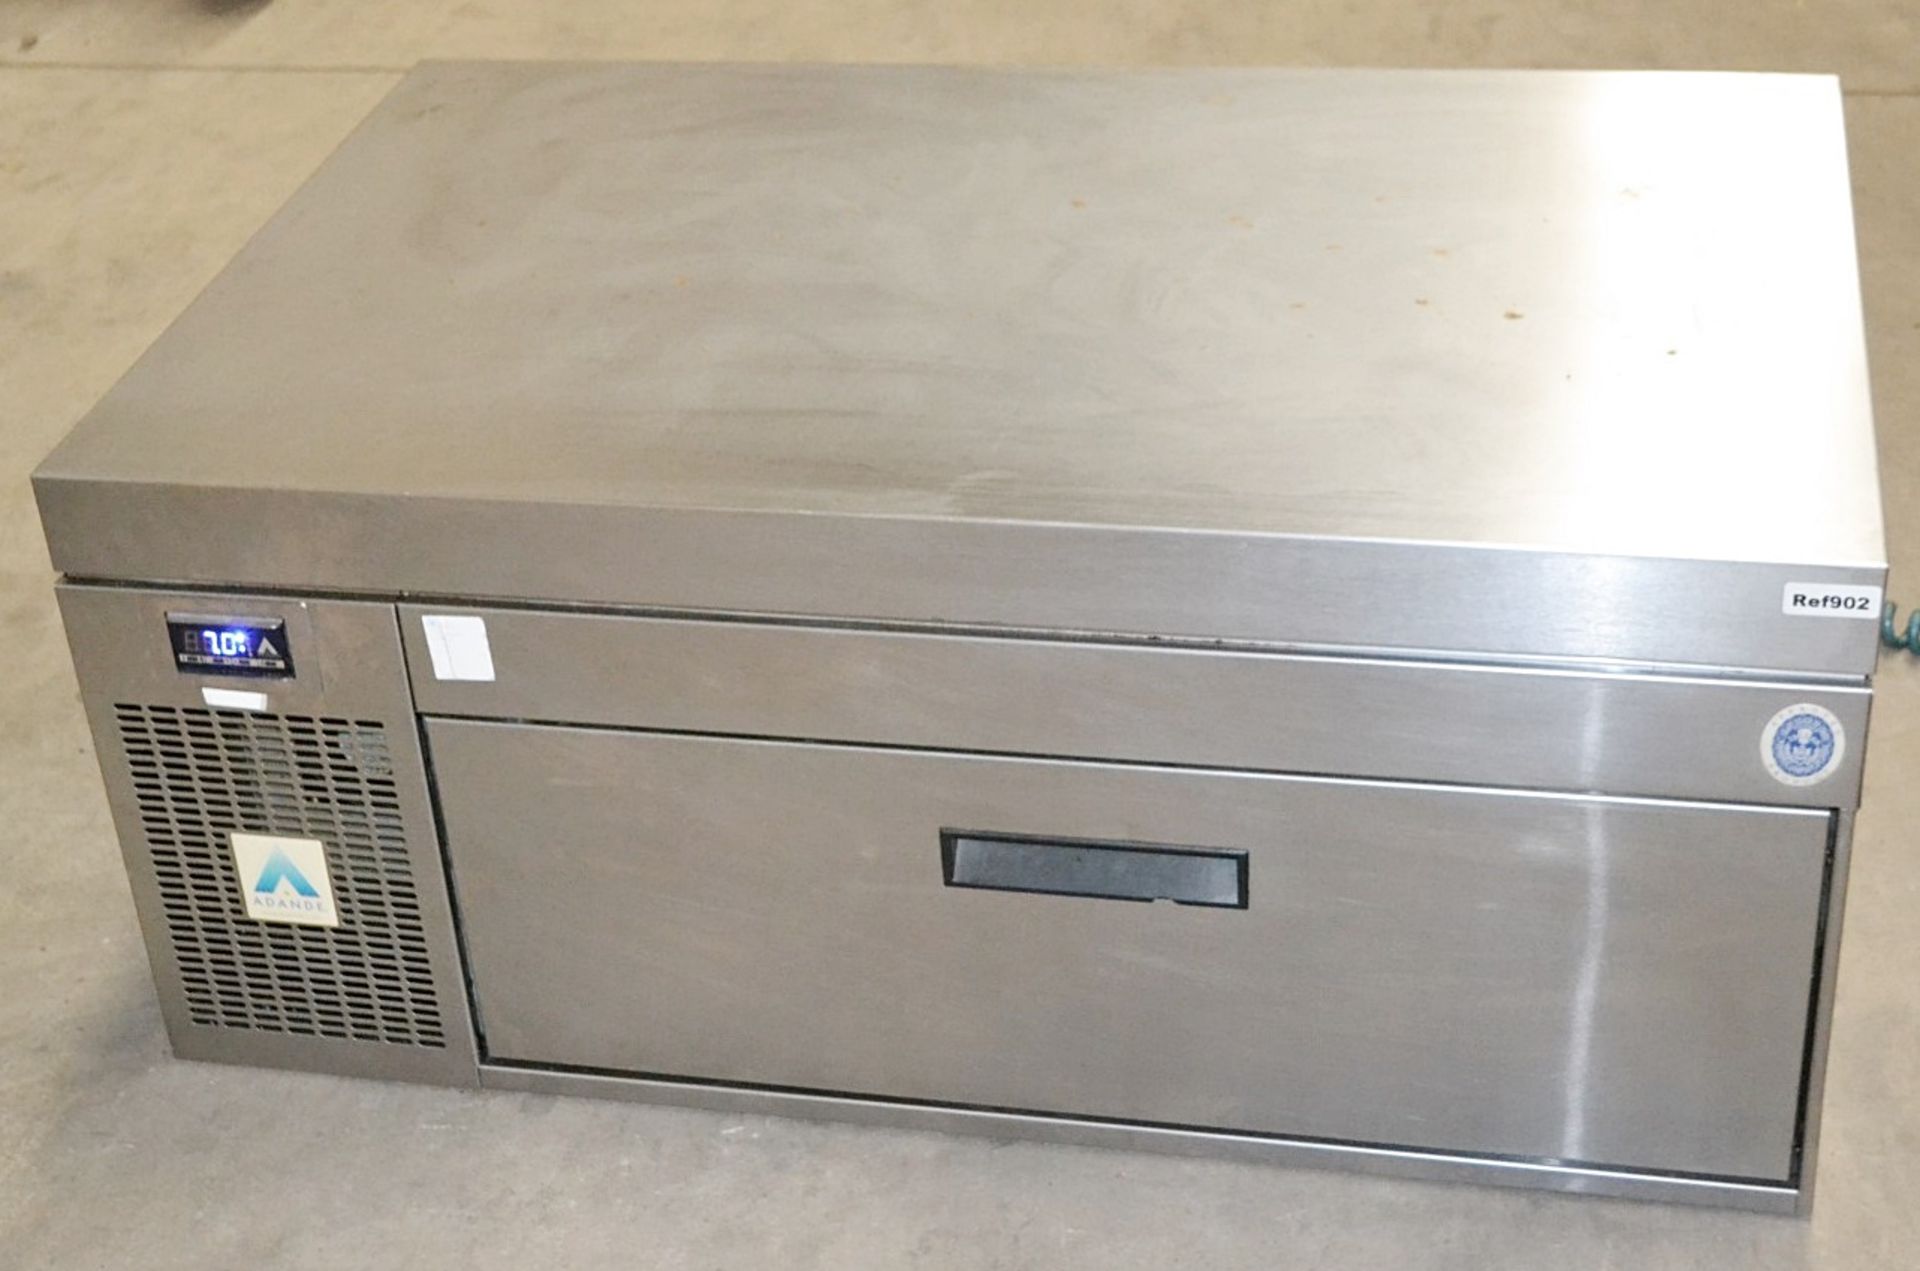 1 x ADANDE VCS R2 Under Counter Single Drawer Refrigeration Unit - Dimensions: W110 x H46 x D70cm - Image 2 of 6